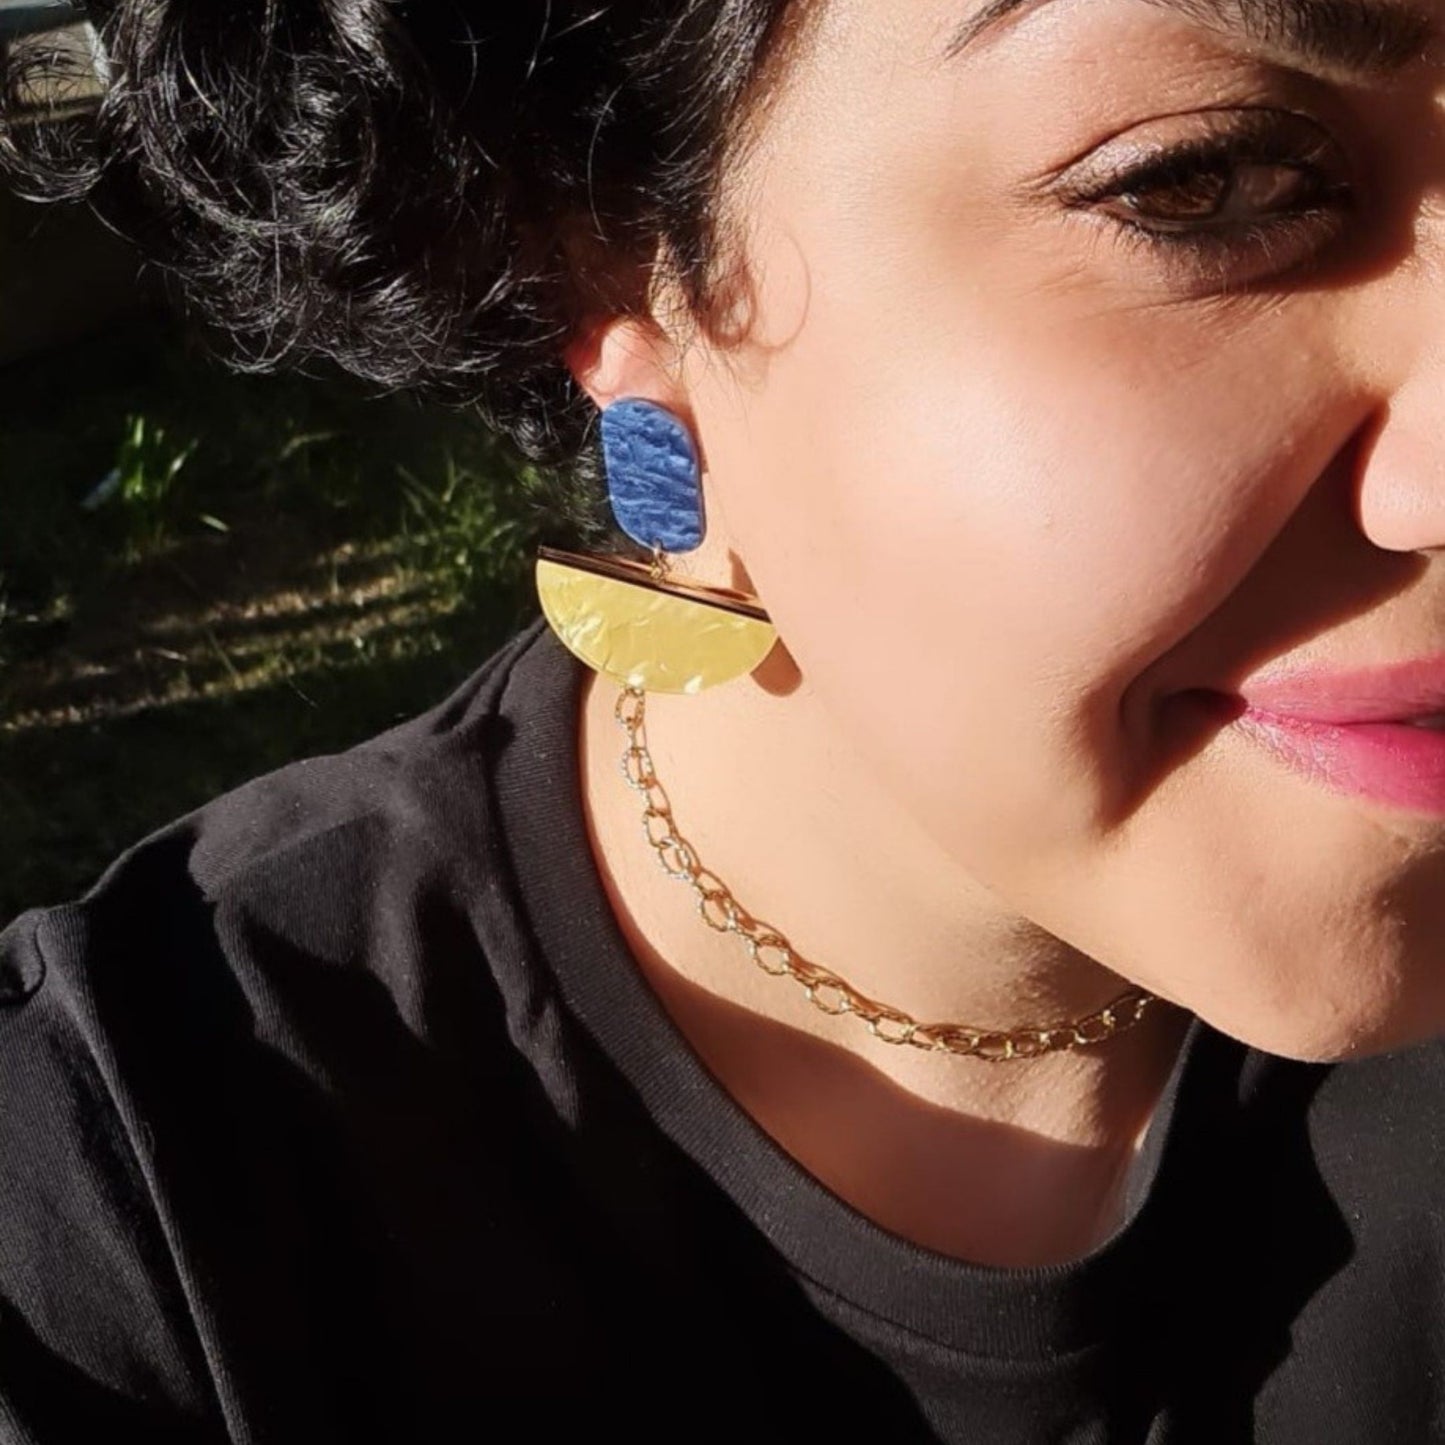 Recycled Half Moon Yellow & Blue Resin Drop Earrings